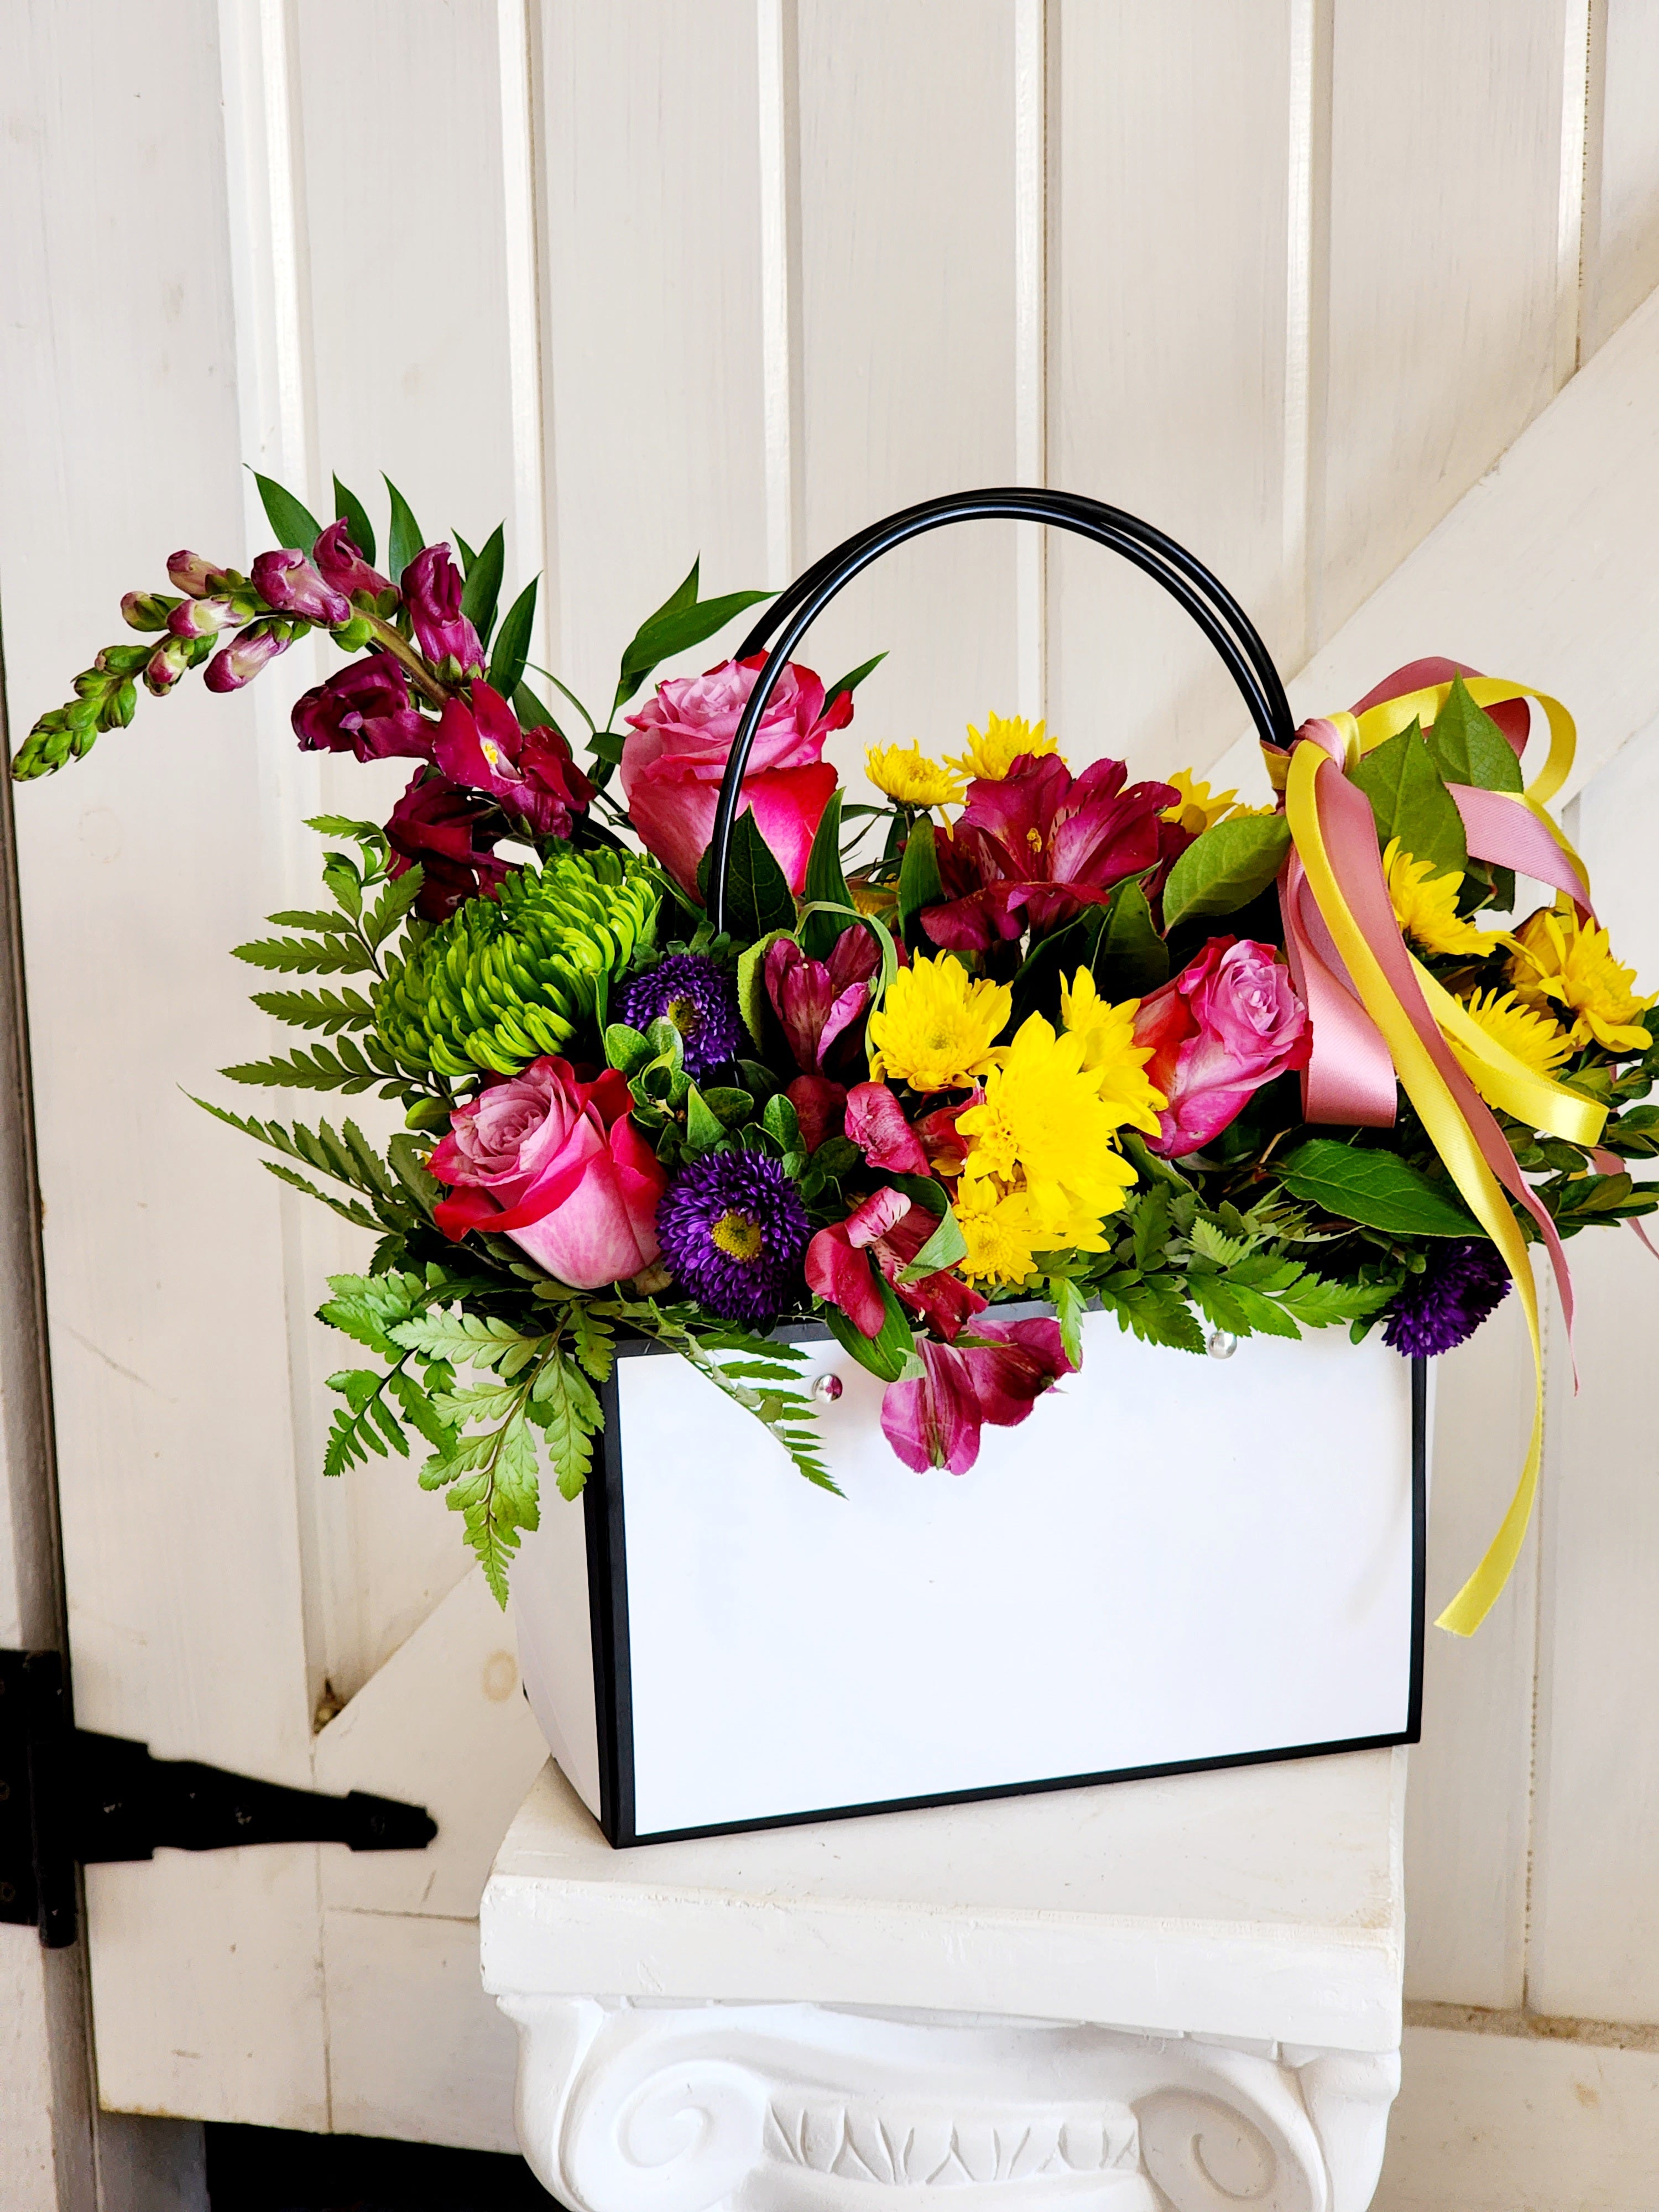 Amazon.com: Purse Flower Vase, with Handles Bubble Handbag Vases for Flowers  Purse Vase, Modern Farmhouse Decor,Style2-Green : Home & Kitchen